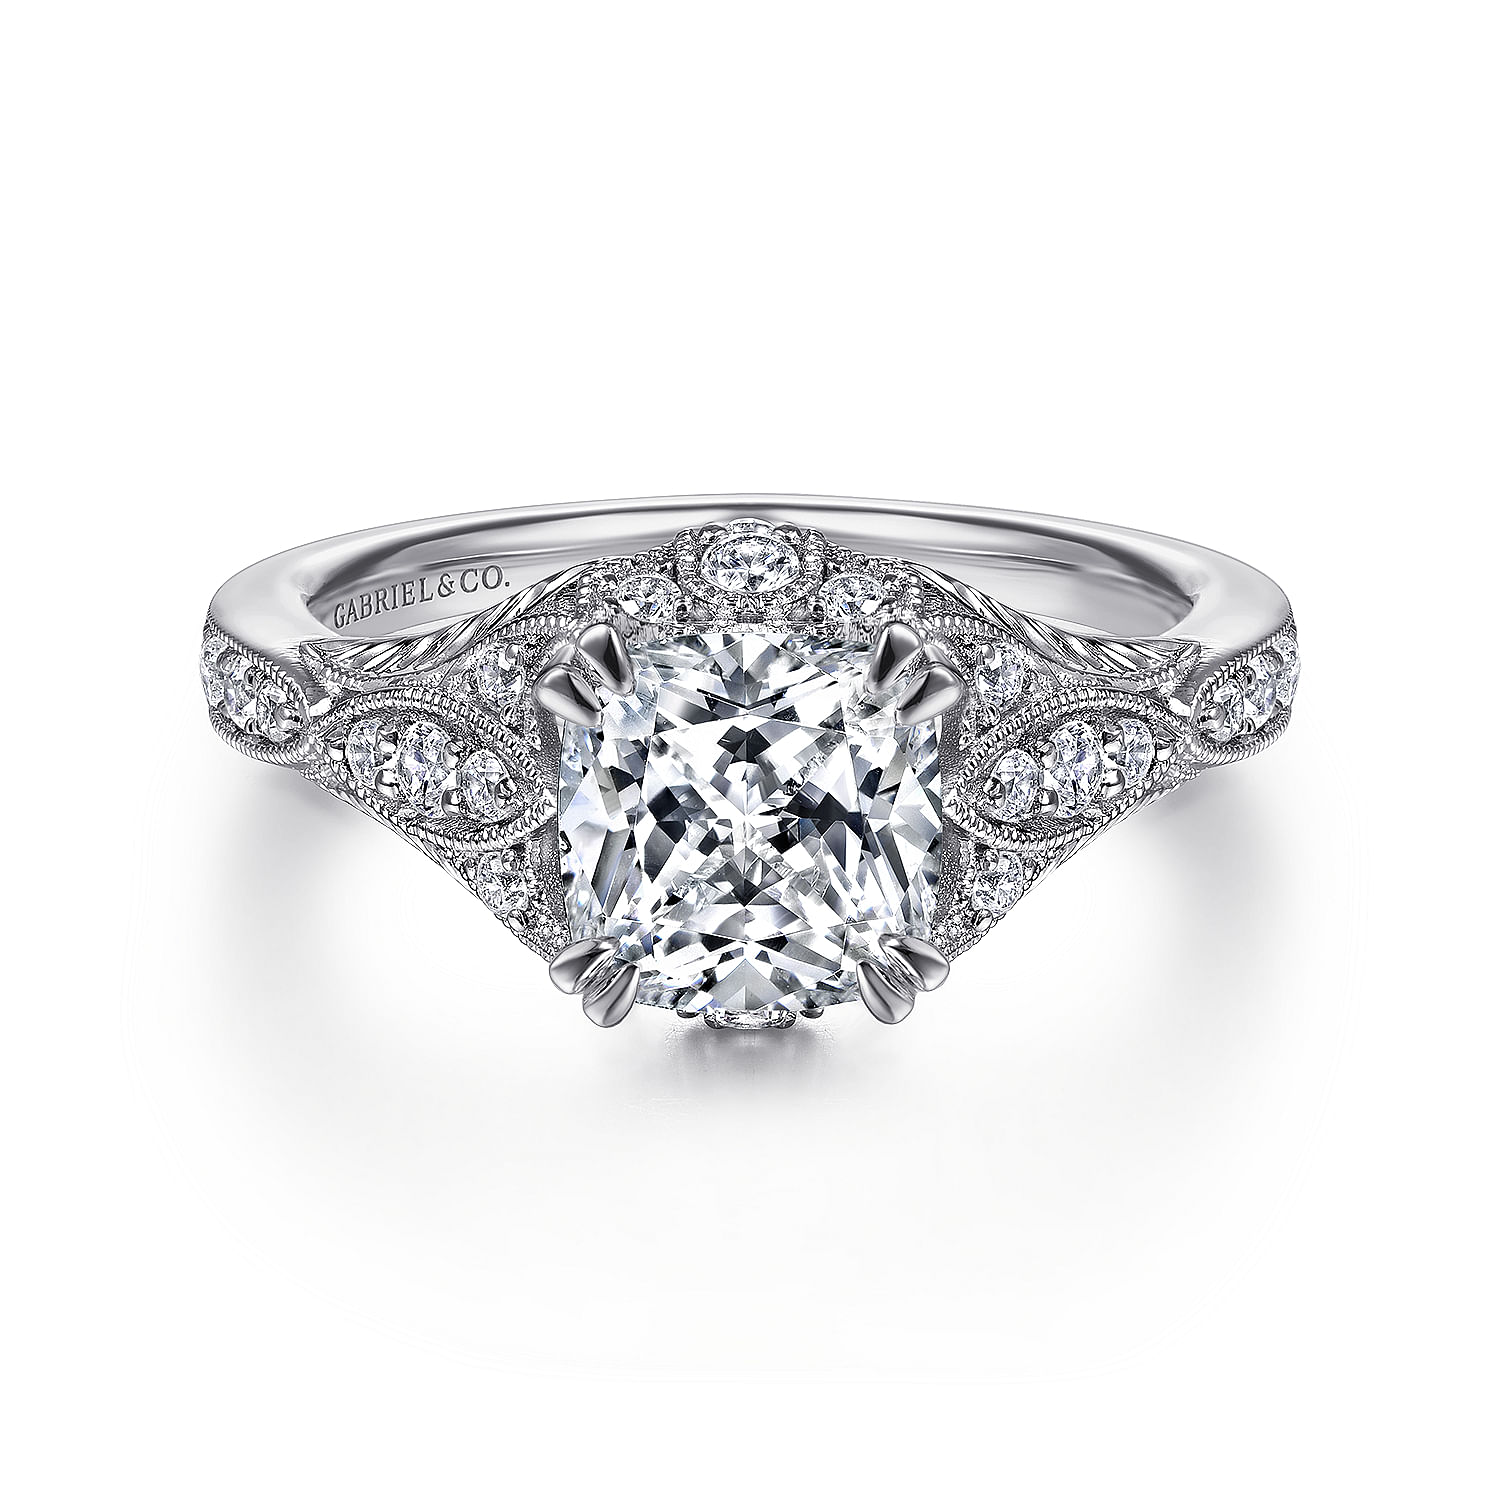 Windsor---Unique-14K-White-Gold-Vintage-Inspired-Cushion-Cut-Diamond-Halo-Engagement-Ring1